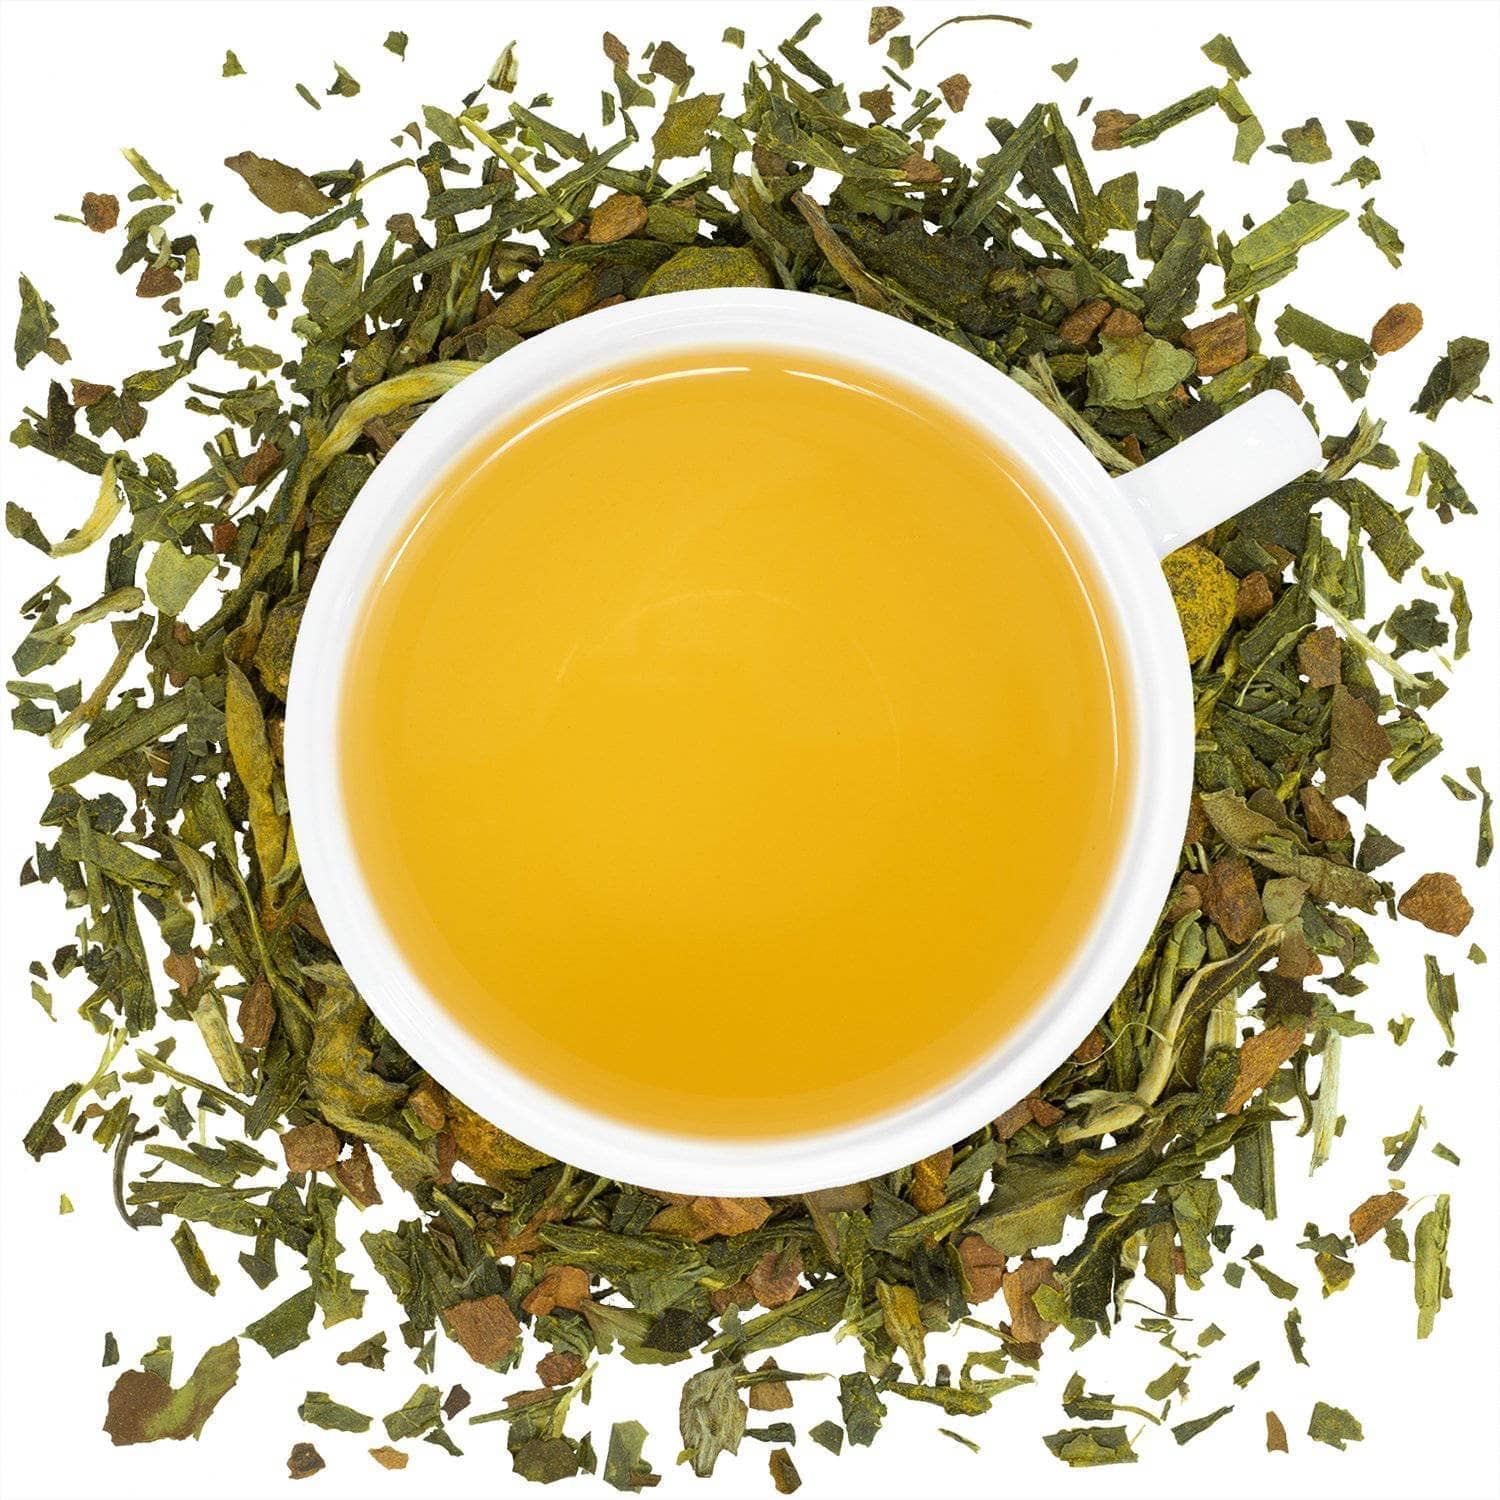 Organic Healthy Heart Tea - Loose Leaf Tea - Full Leaf Tea Company